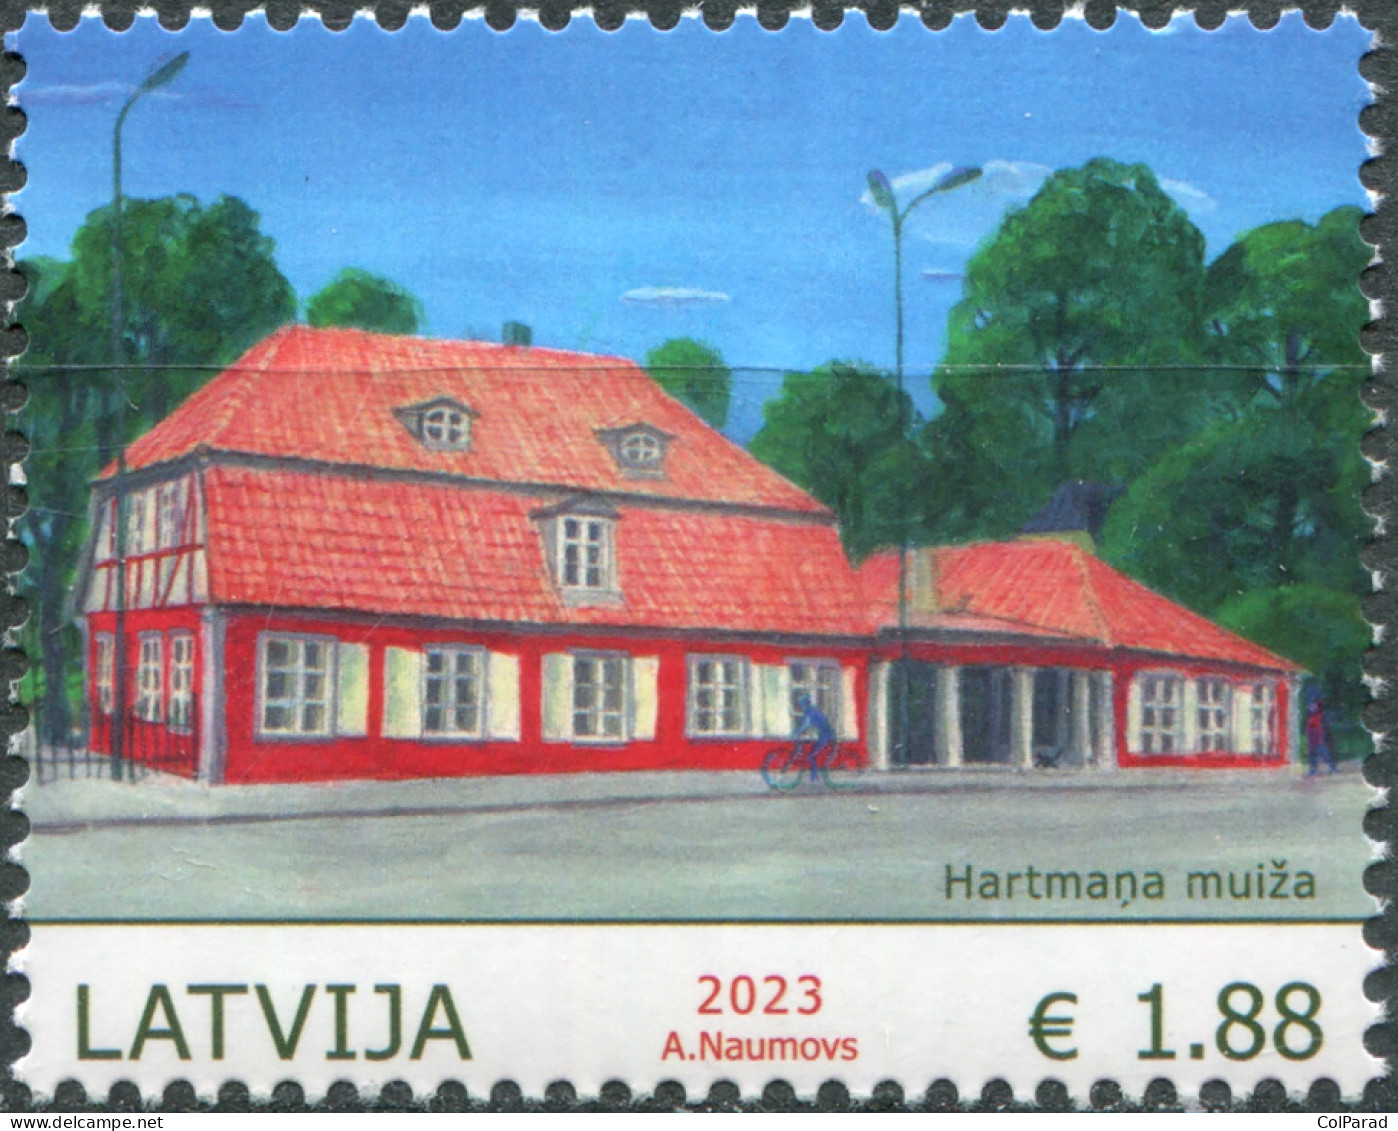 LATVIA - 2023 - STAMP MNH ** - Manor Houses Of Latvia. Hartmann Manor, Riga - Letland